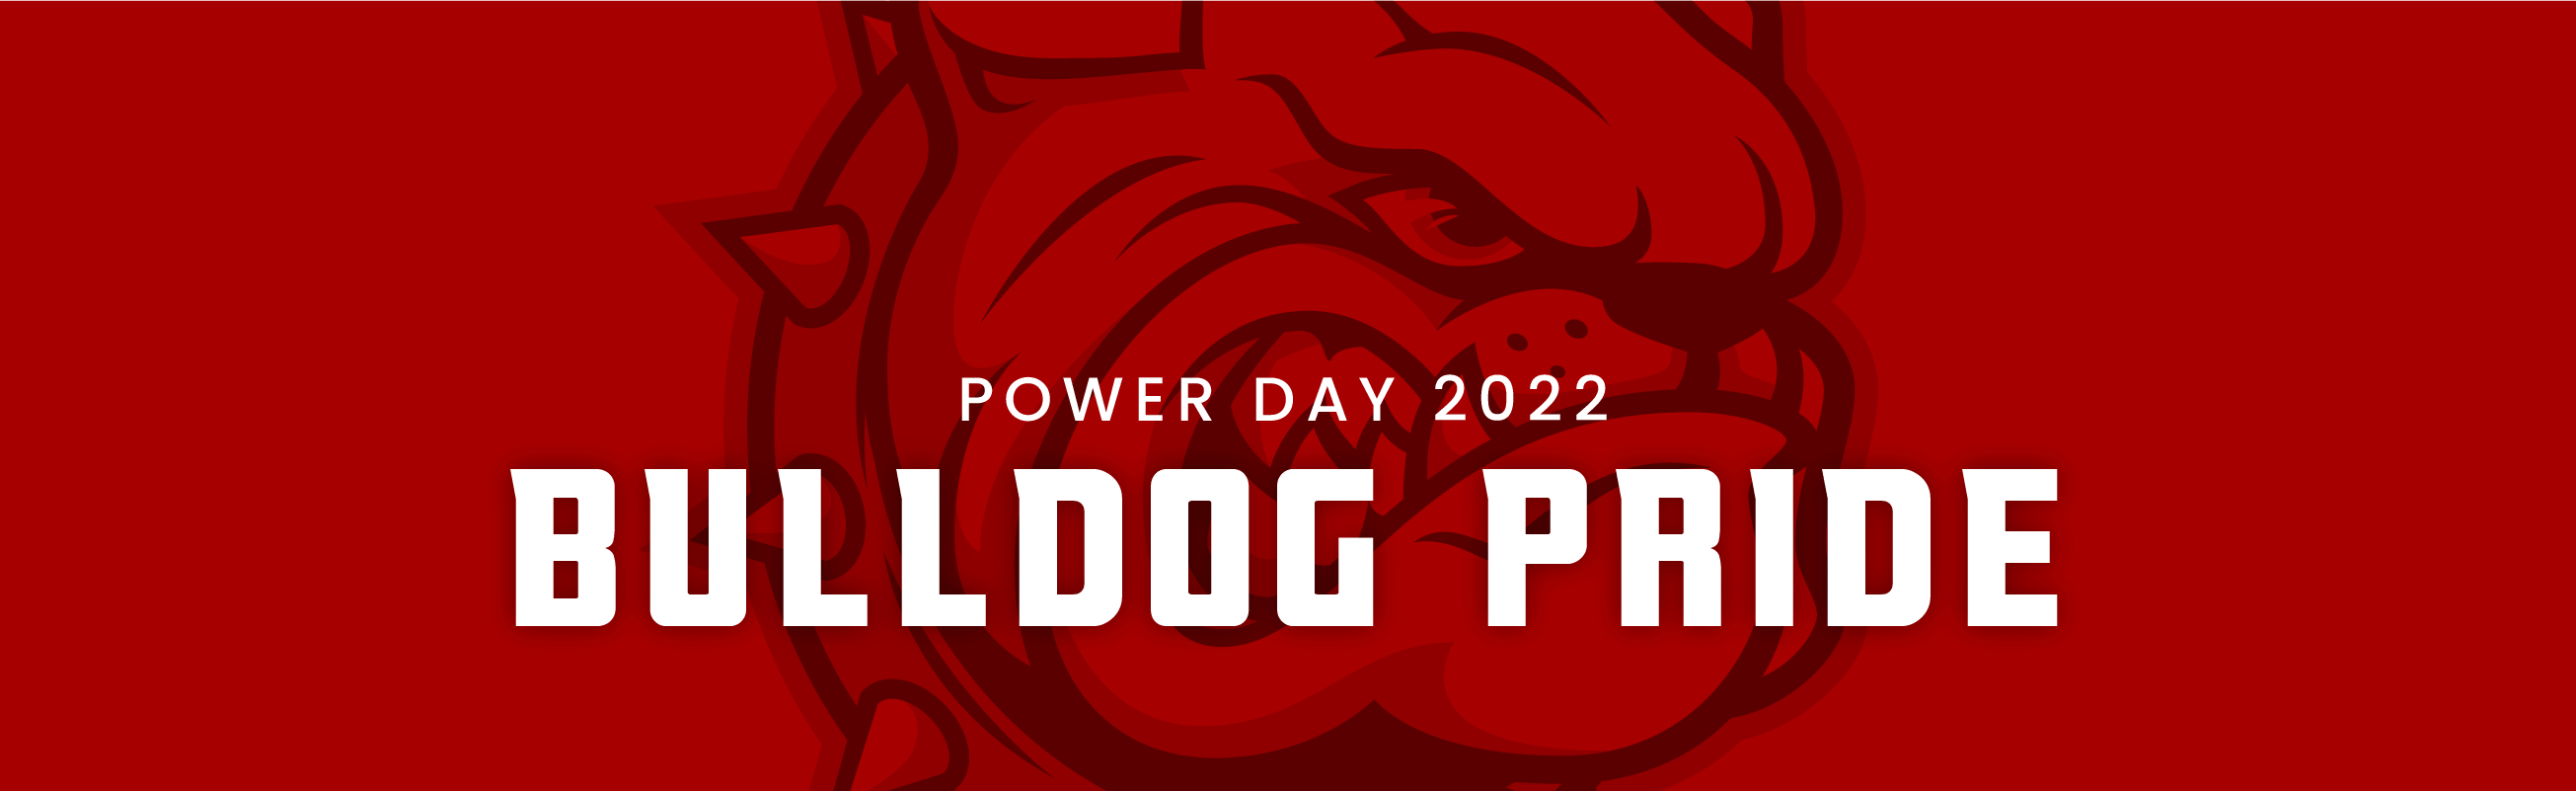 Power Day 2022